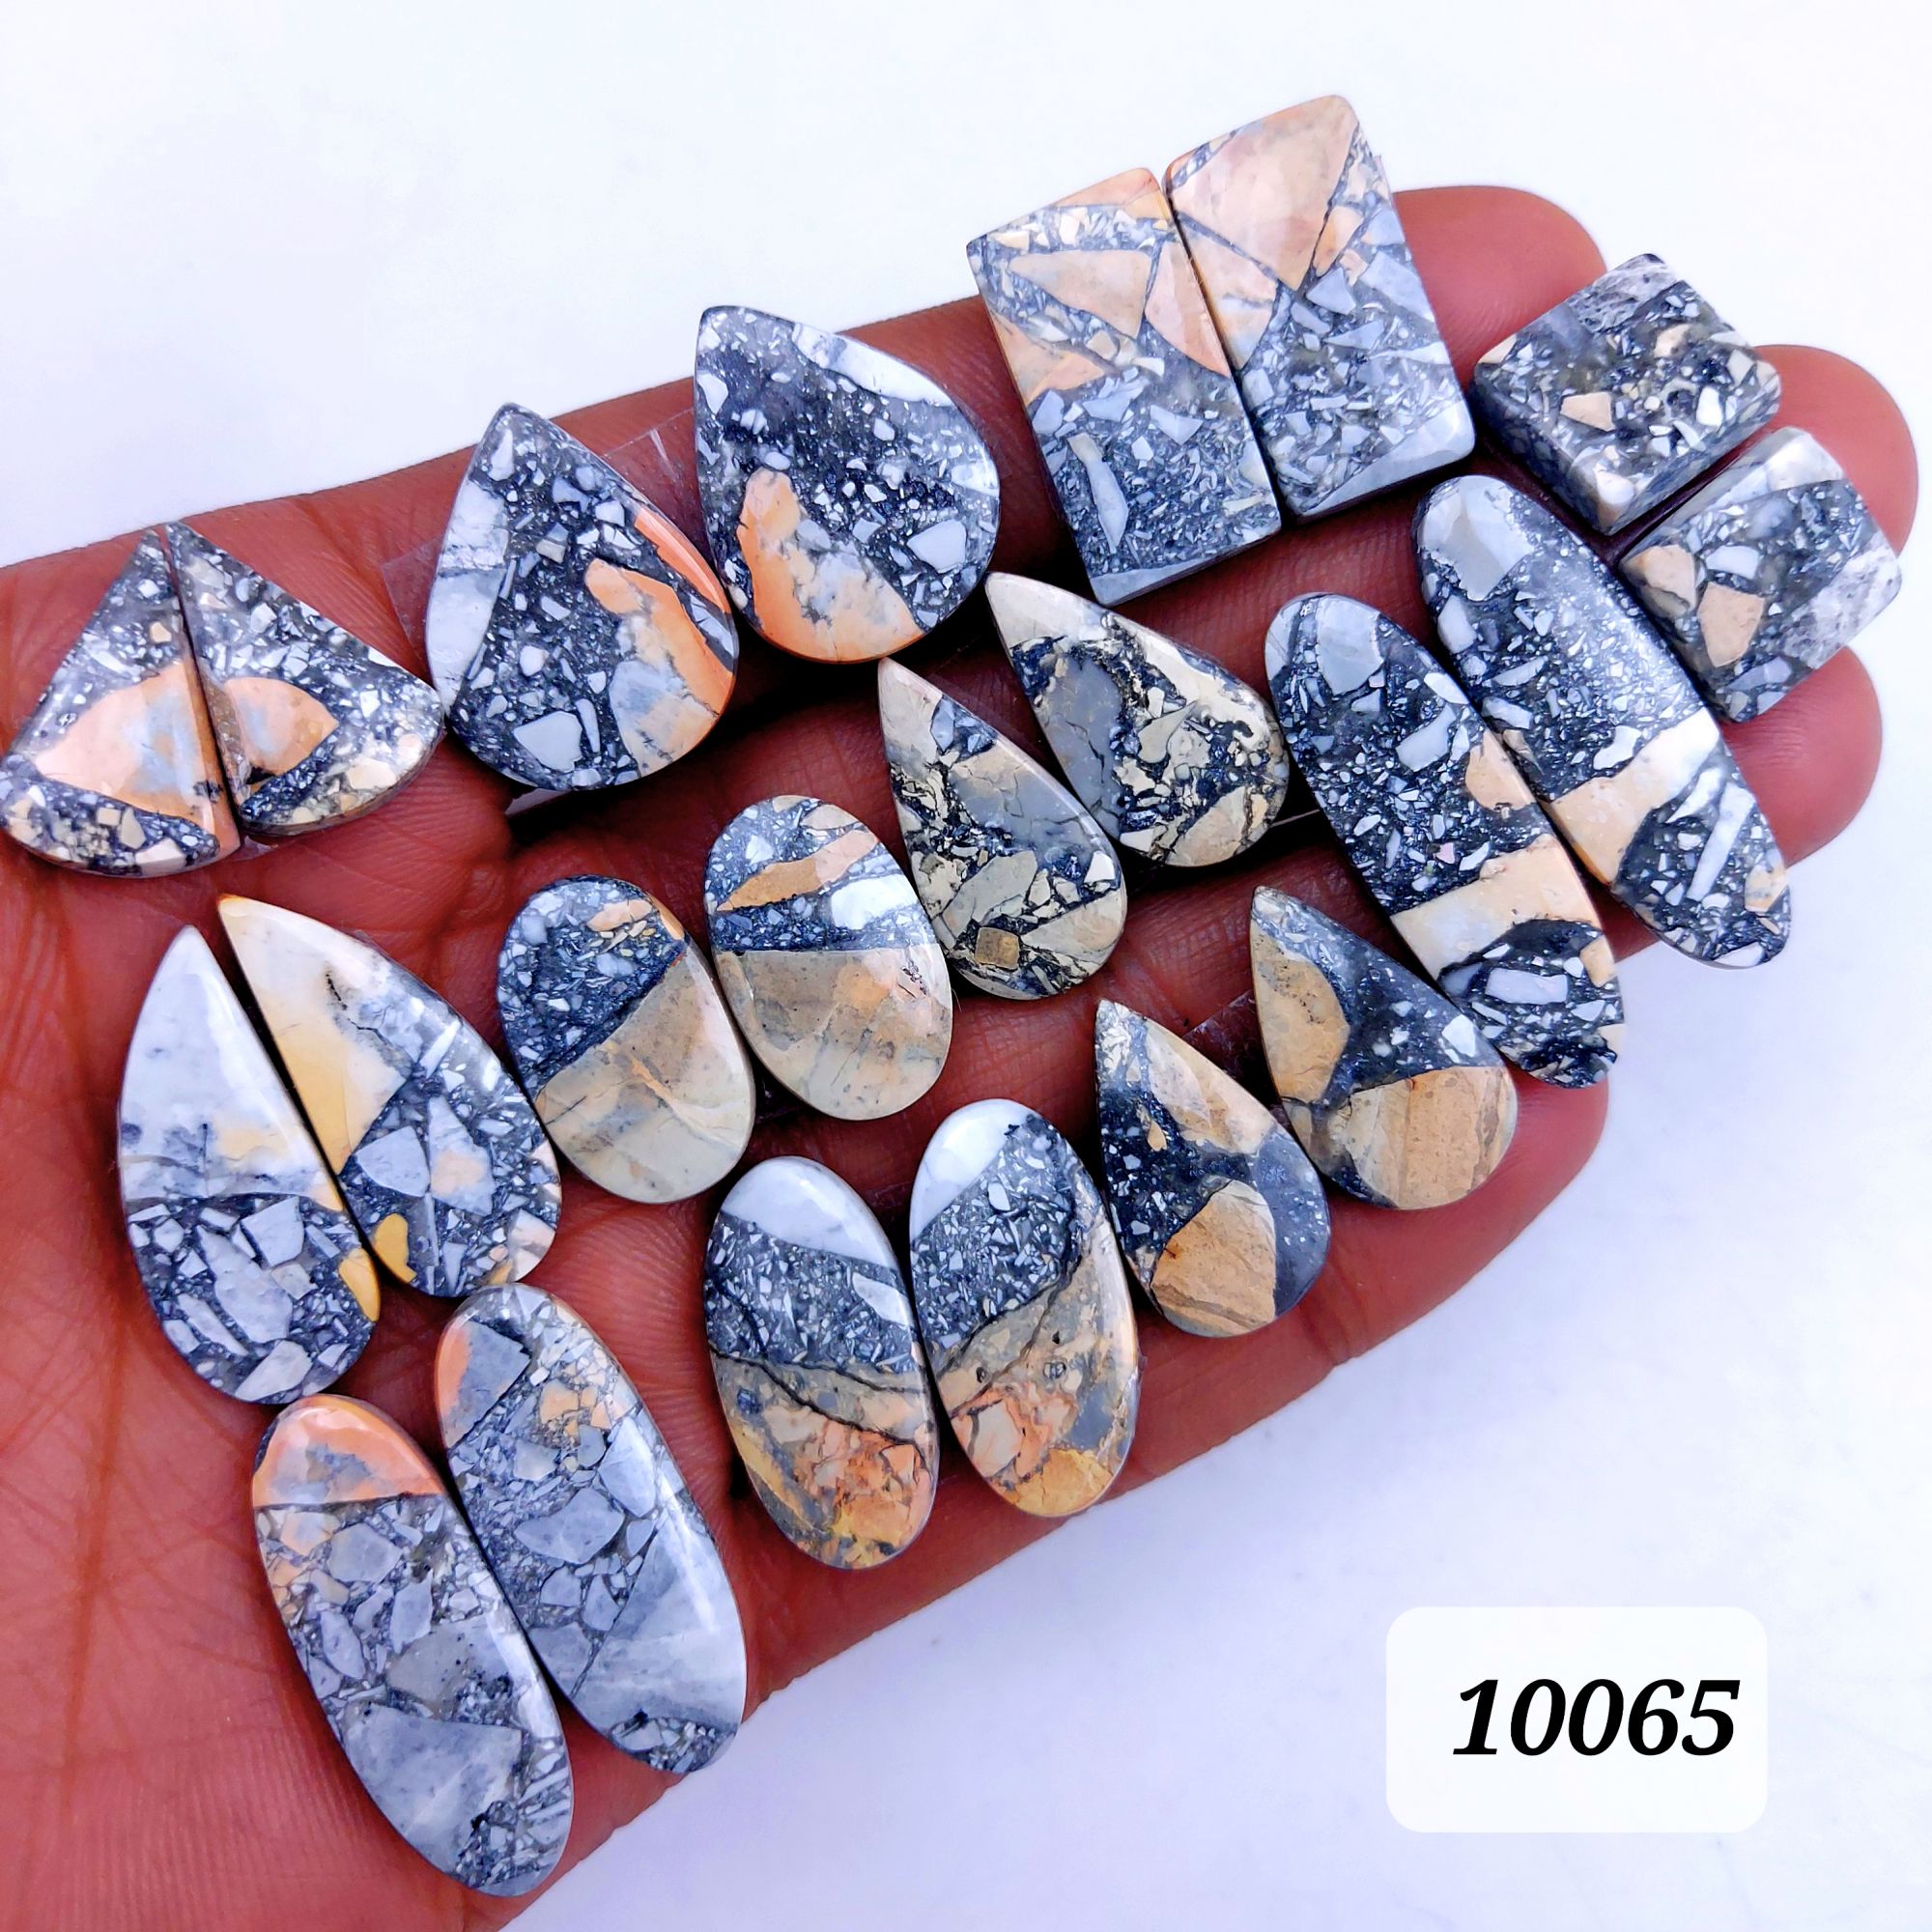 11Pcs 276Cts Natural Maligano Jasper Cabochon Pair Lot Back Side Unpolished Semi-Precious Gemstones For Jewelry Making 33x11 13x12mm #10065